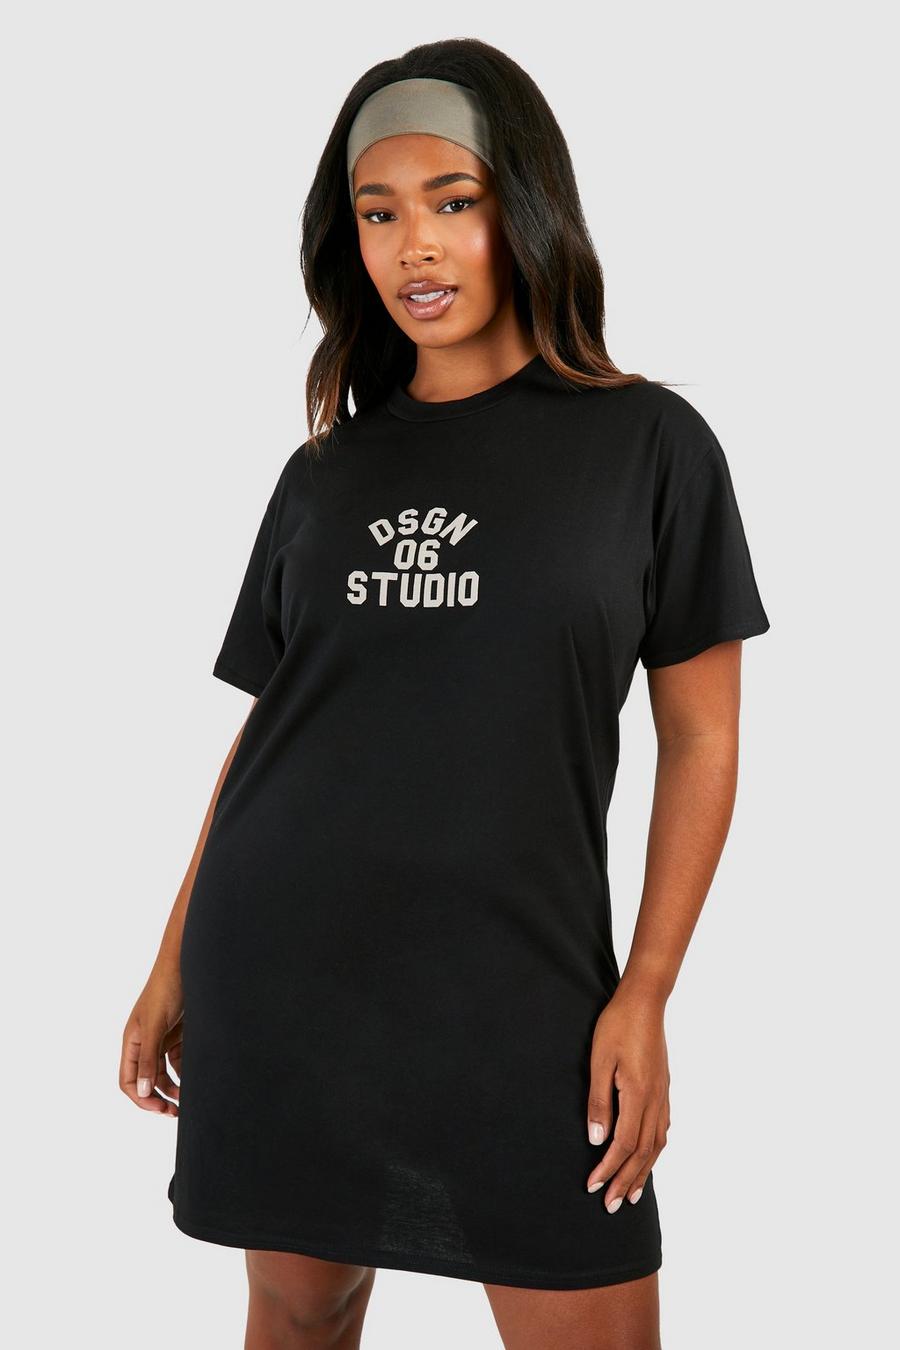 Black Plus Dsgn Studio Printed T-shirt Dress 